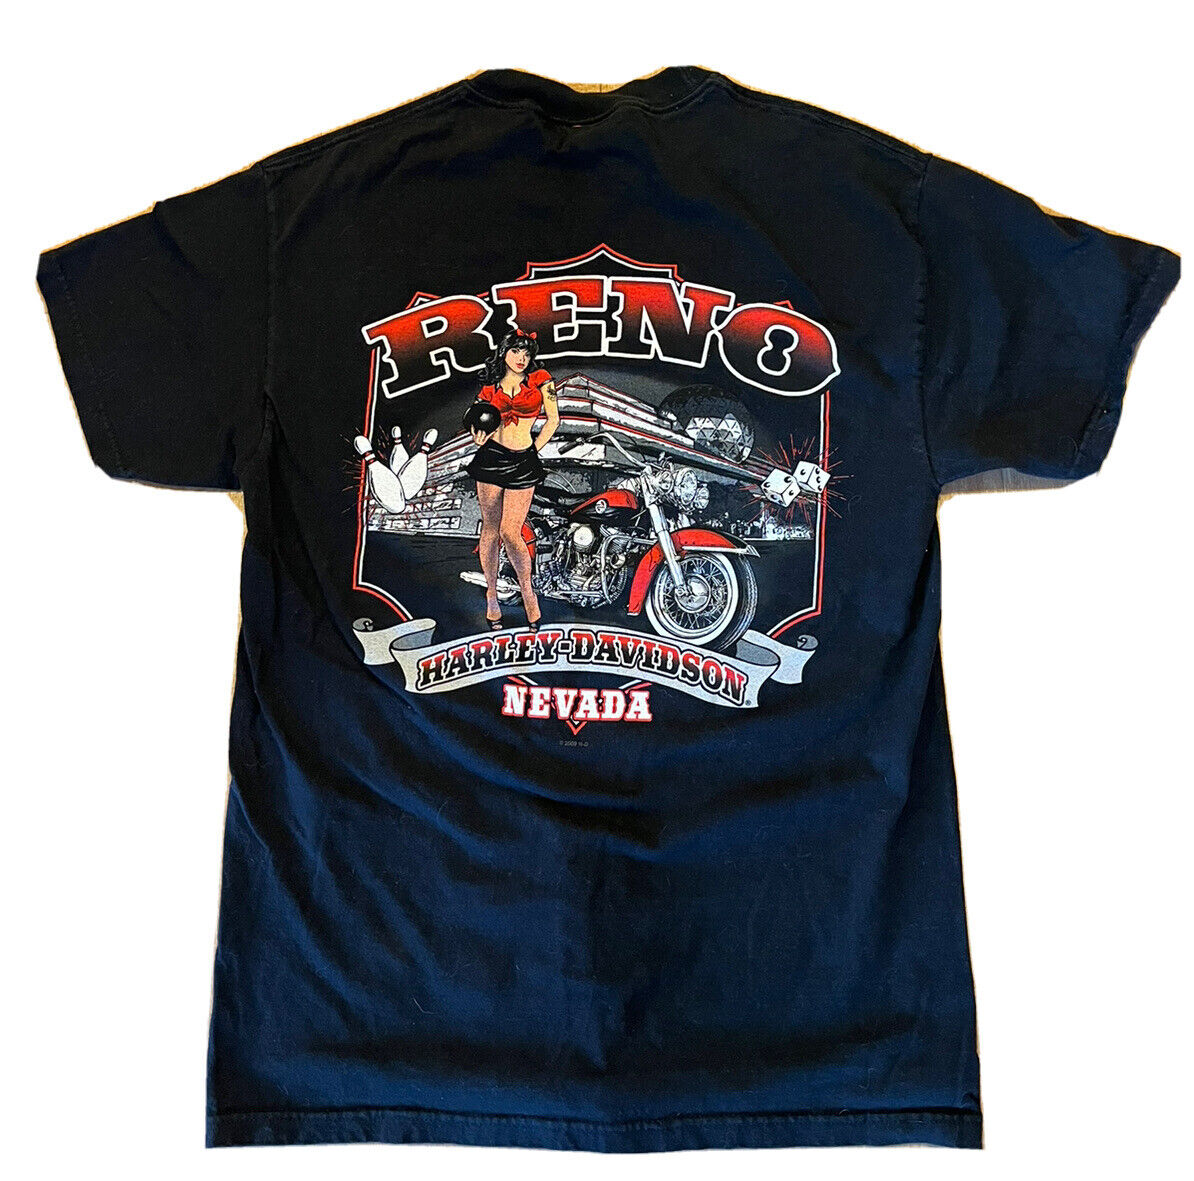 Harley Davidson Reno Nevada Medium T Shirt Motorcycle Biker Crewneck Dice Gamble